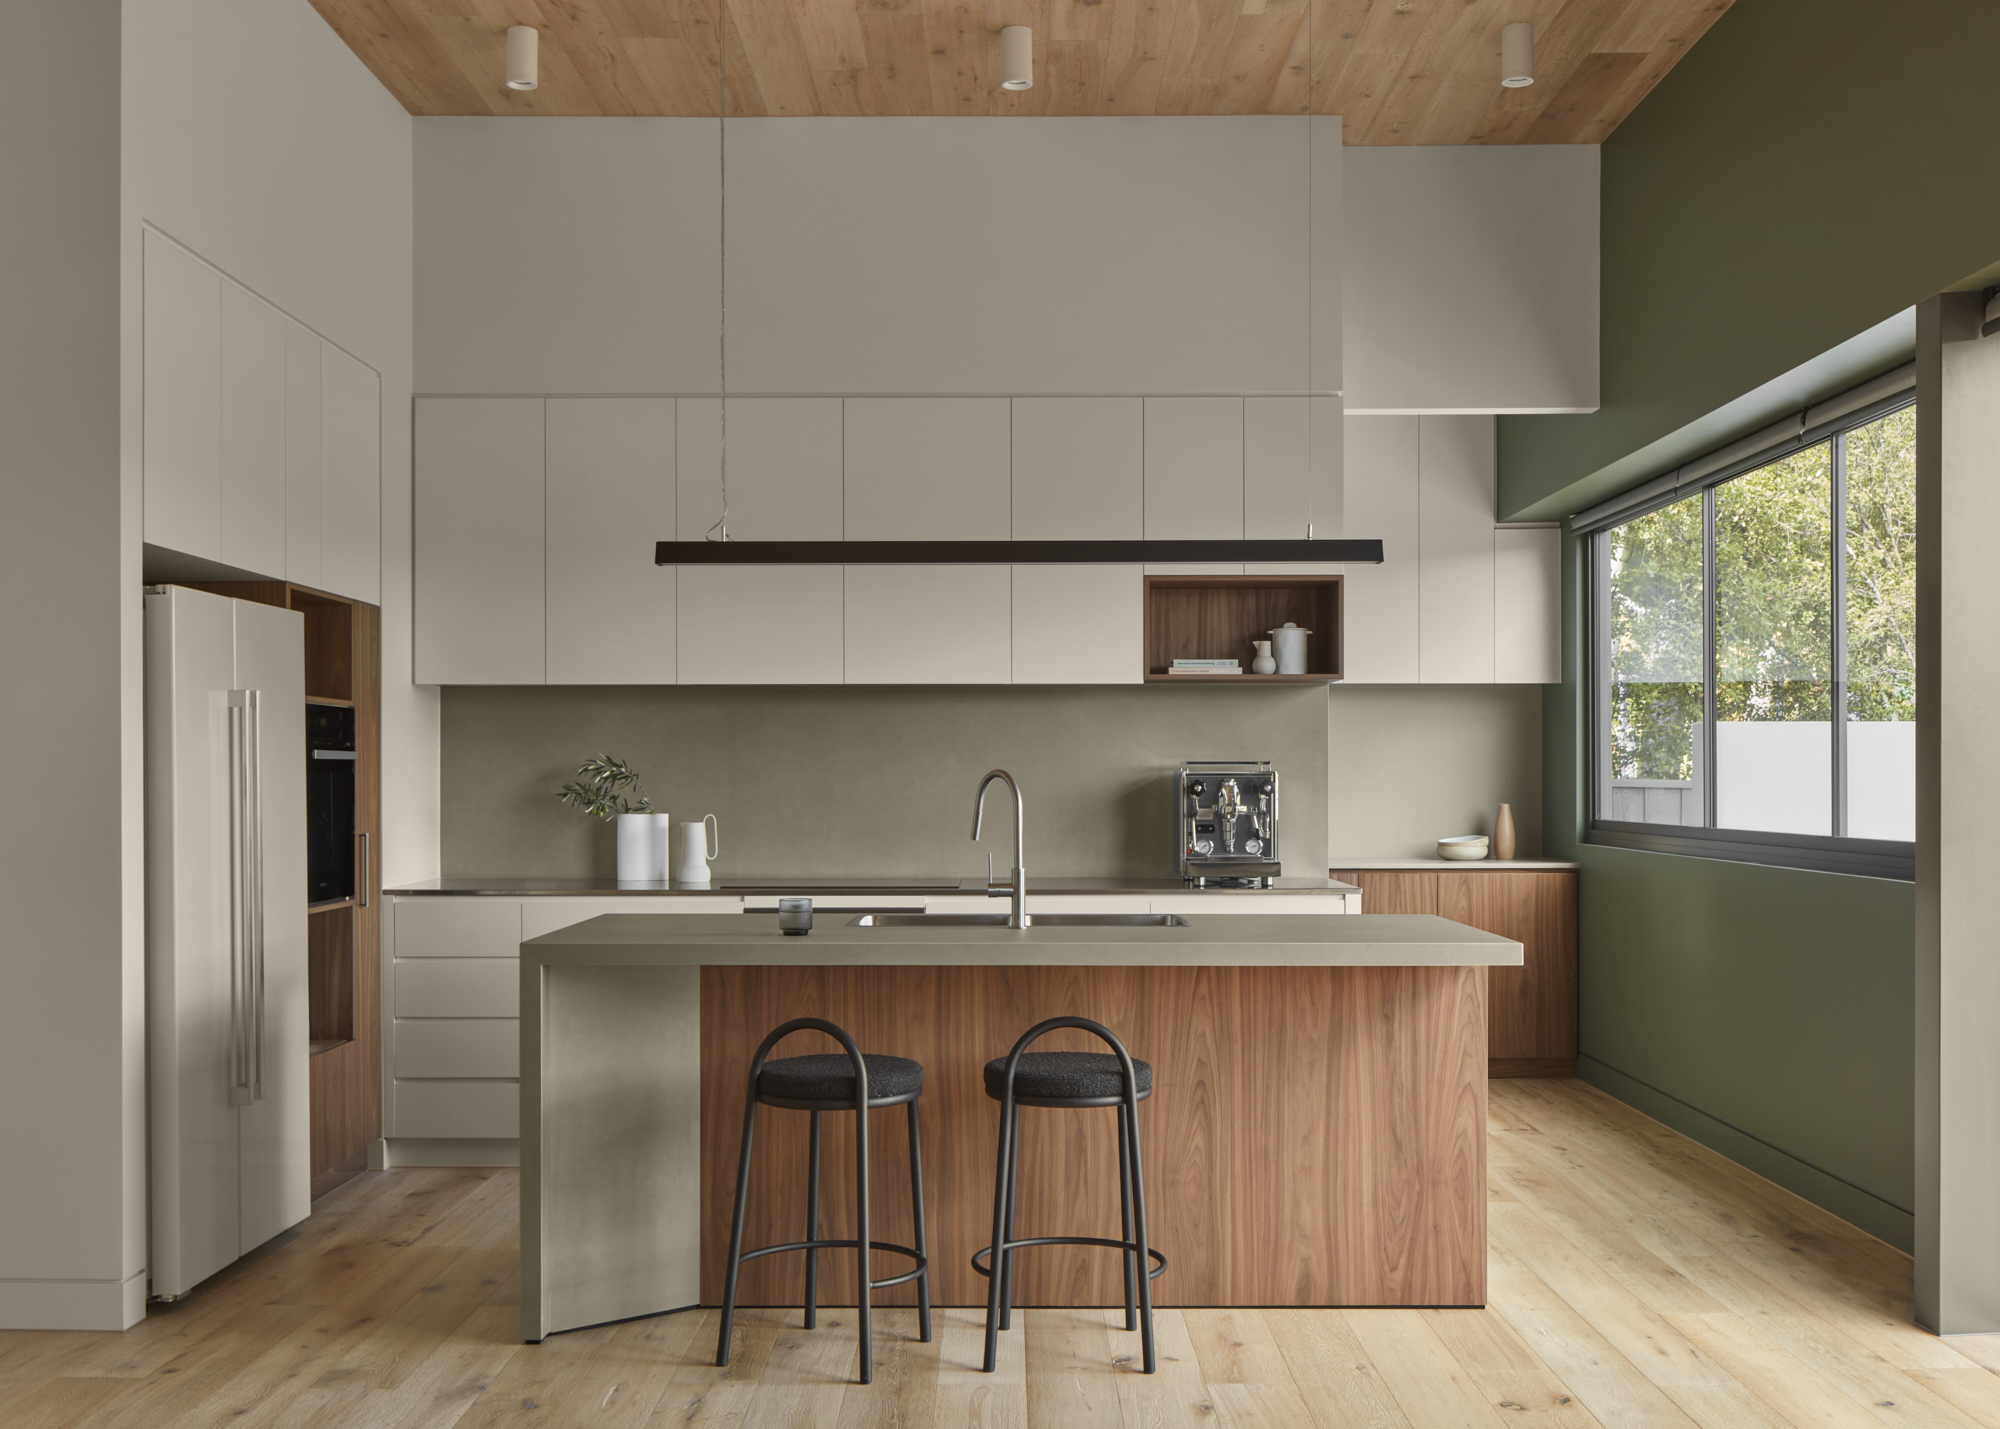 Windust-Archietcture-X-Interiors-Glenlivet-kitchen-high-ceiling